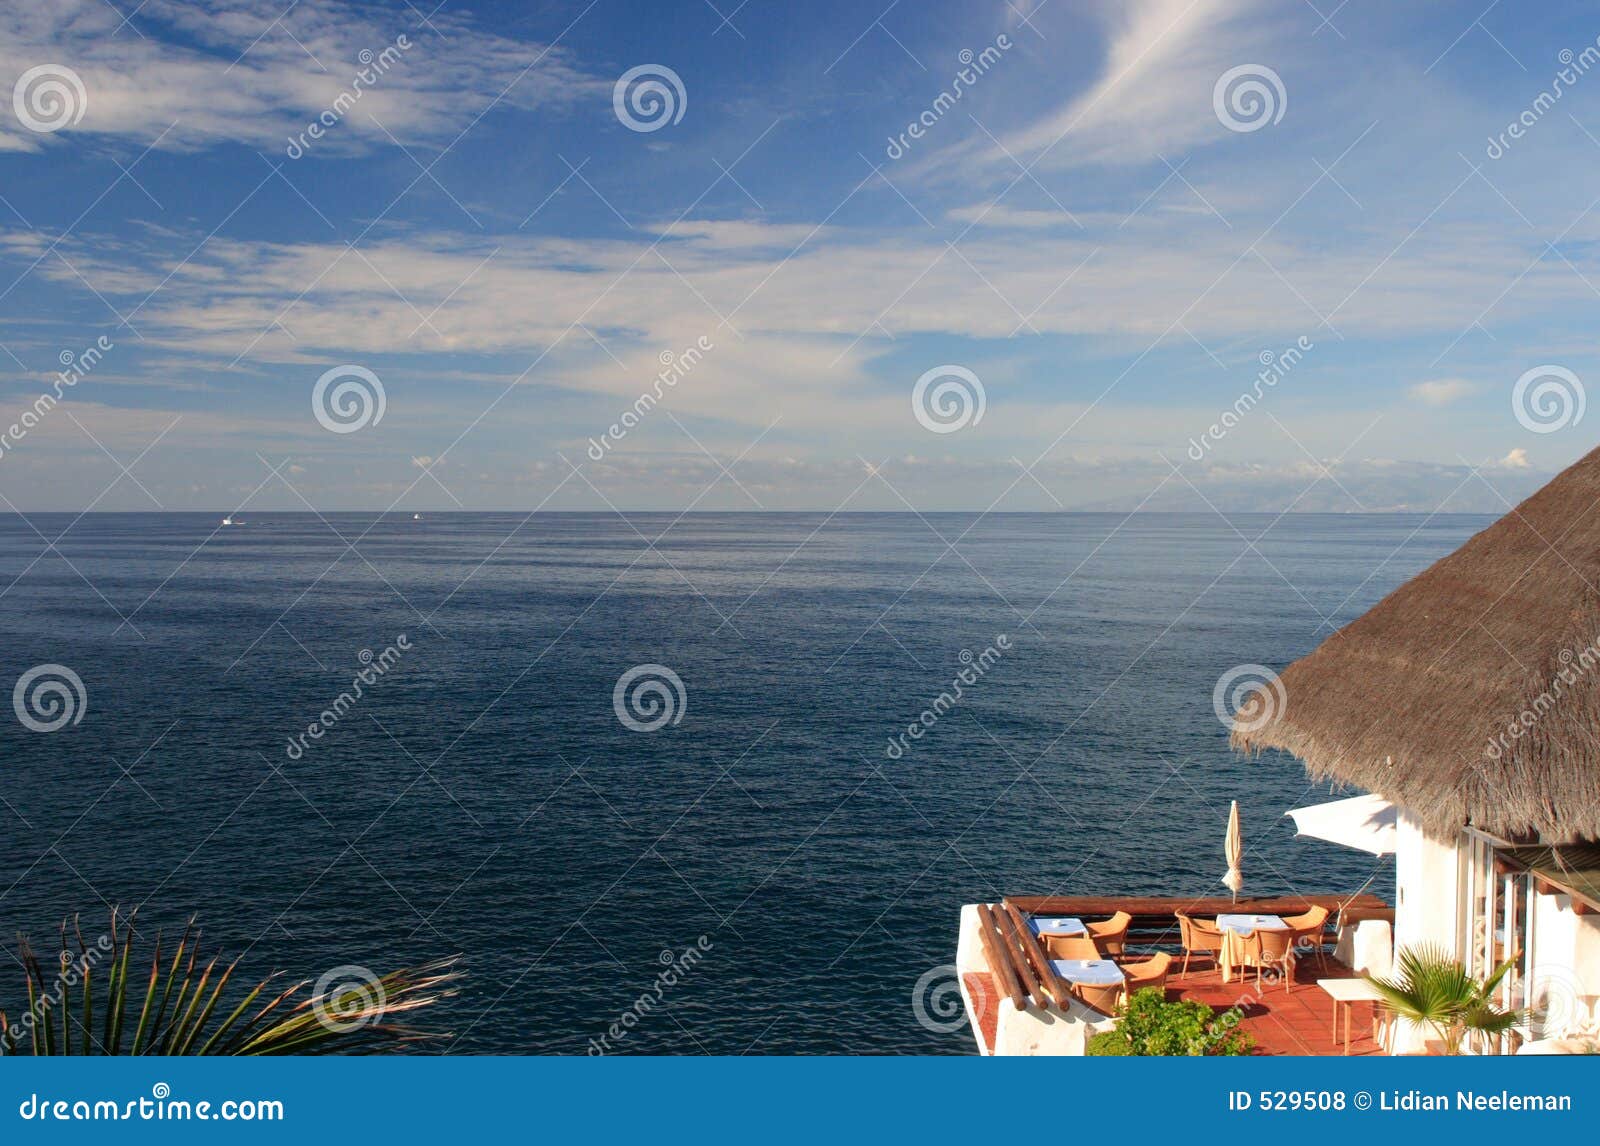 Restaurant with ocean view stock photo. Image of coastline - 529508